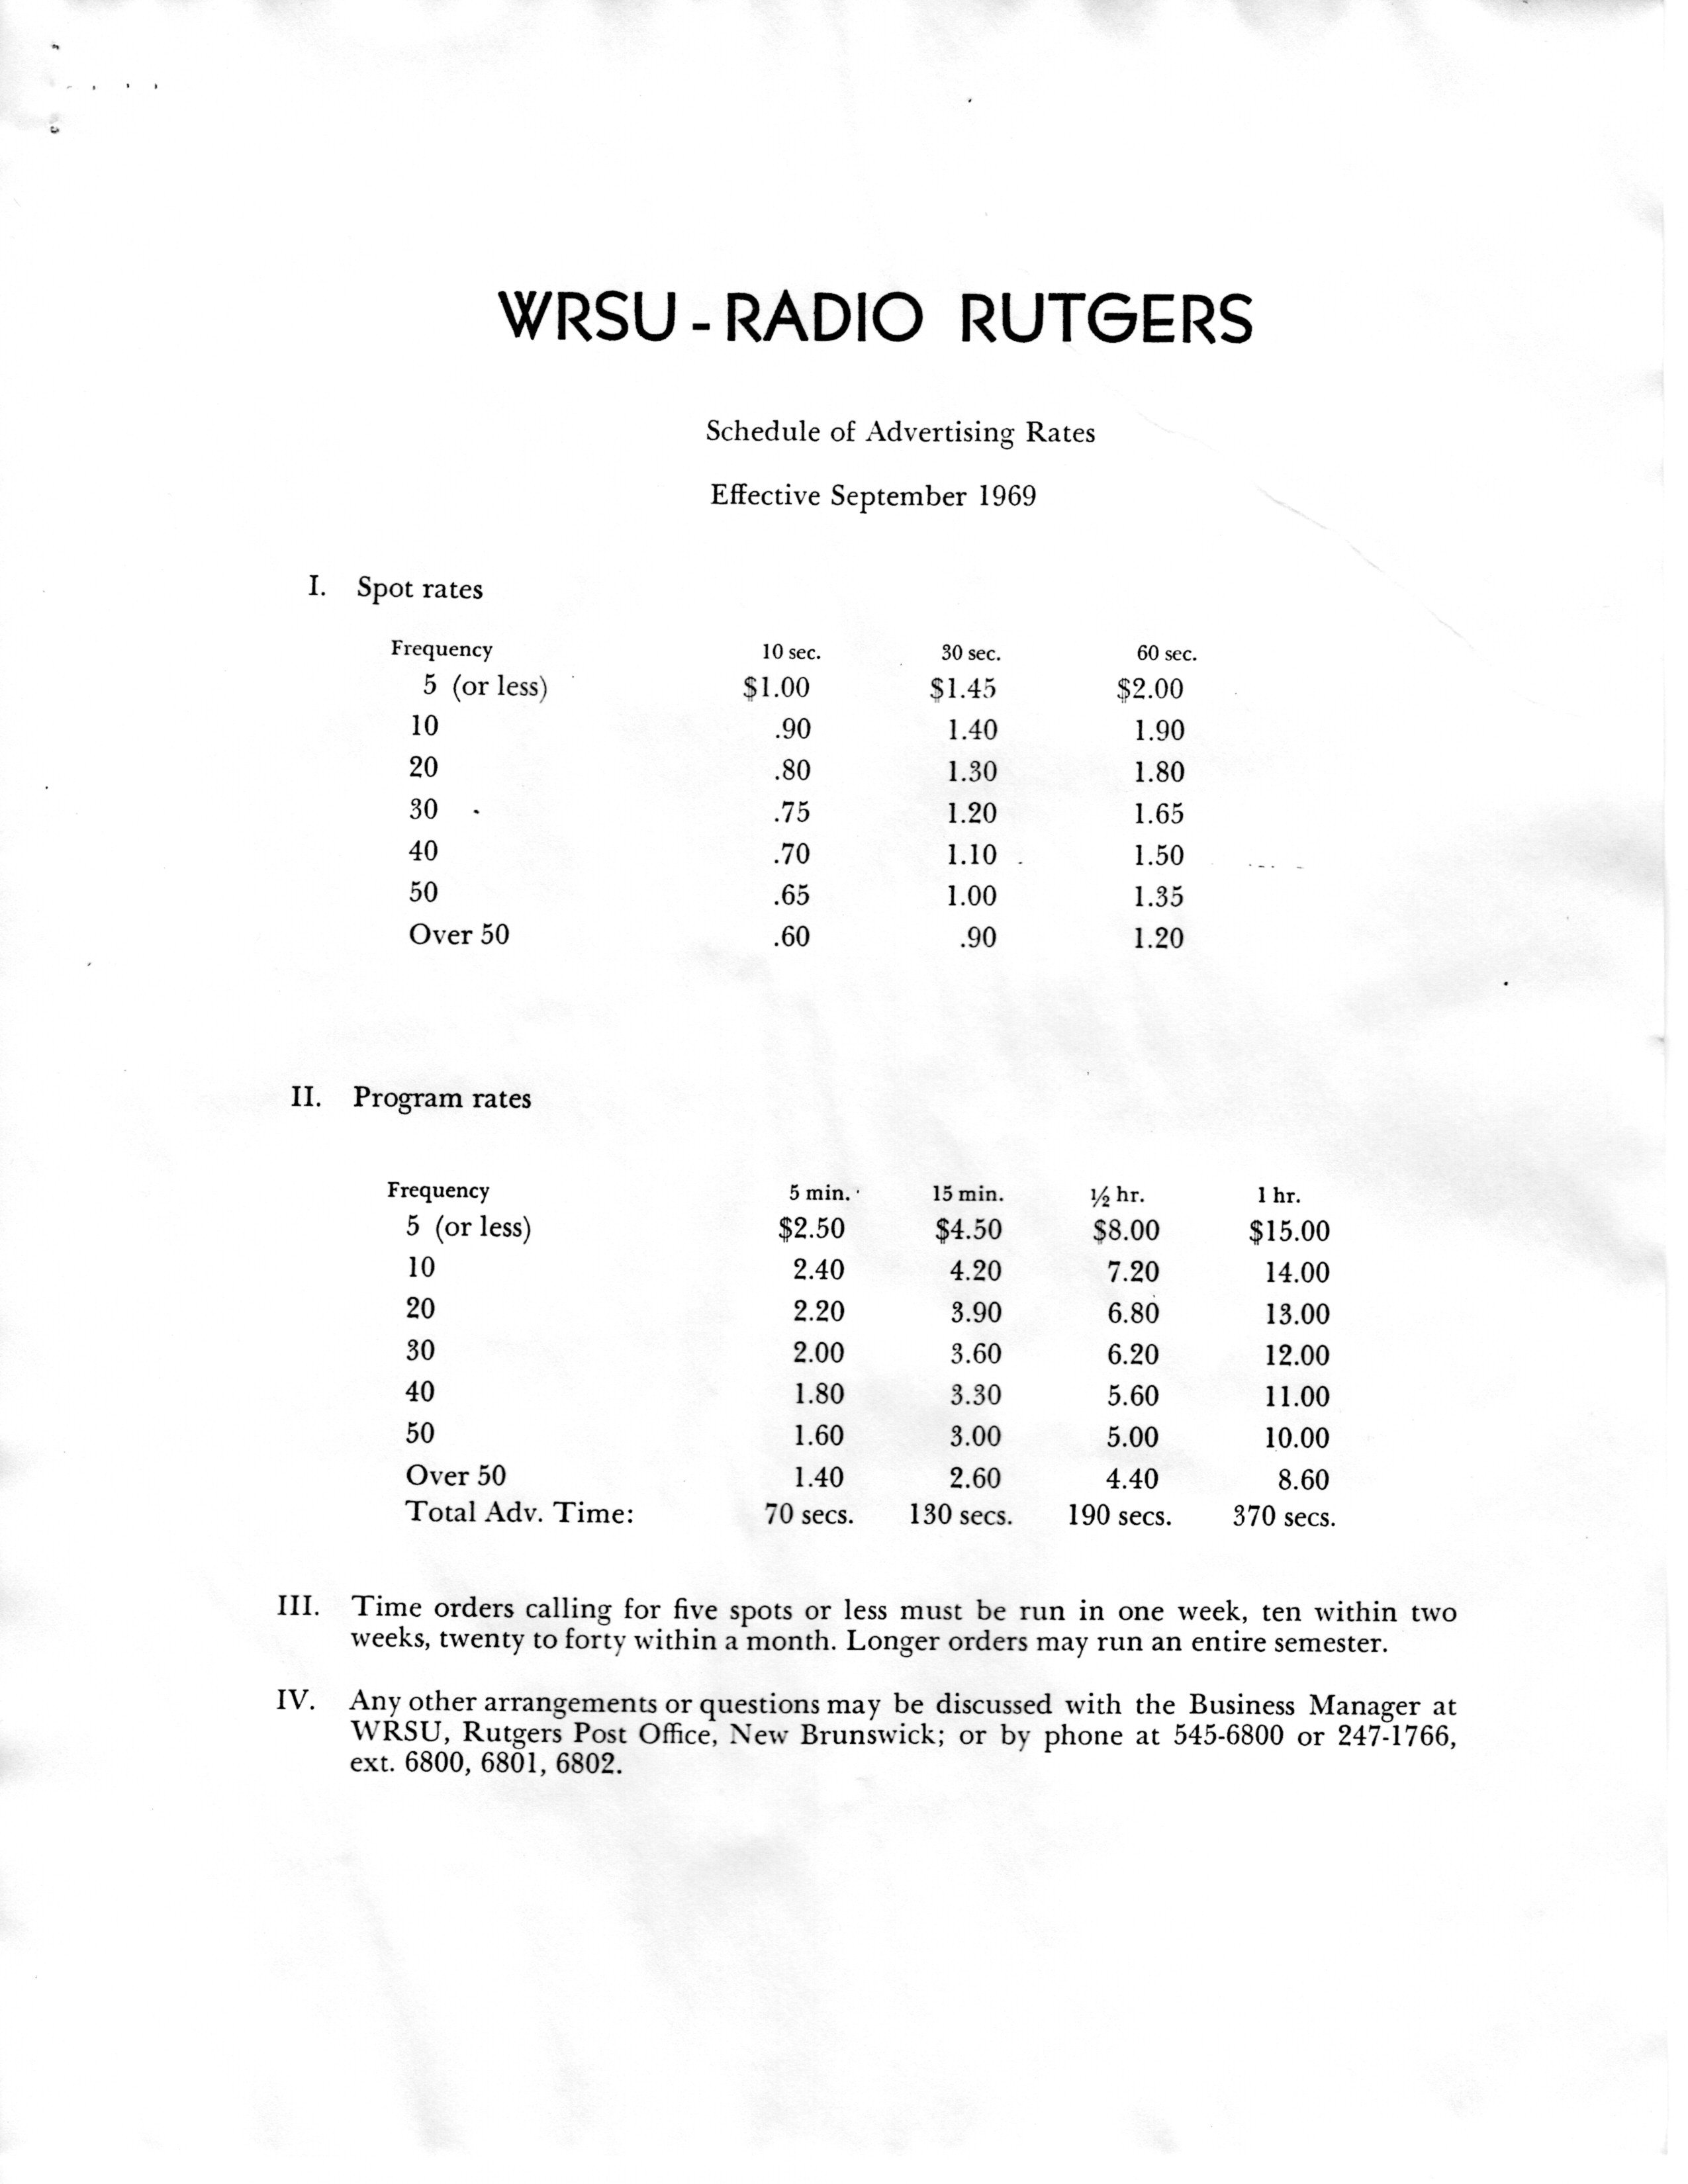 WRSU Rate Schedule in September 1969.